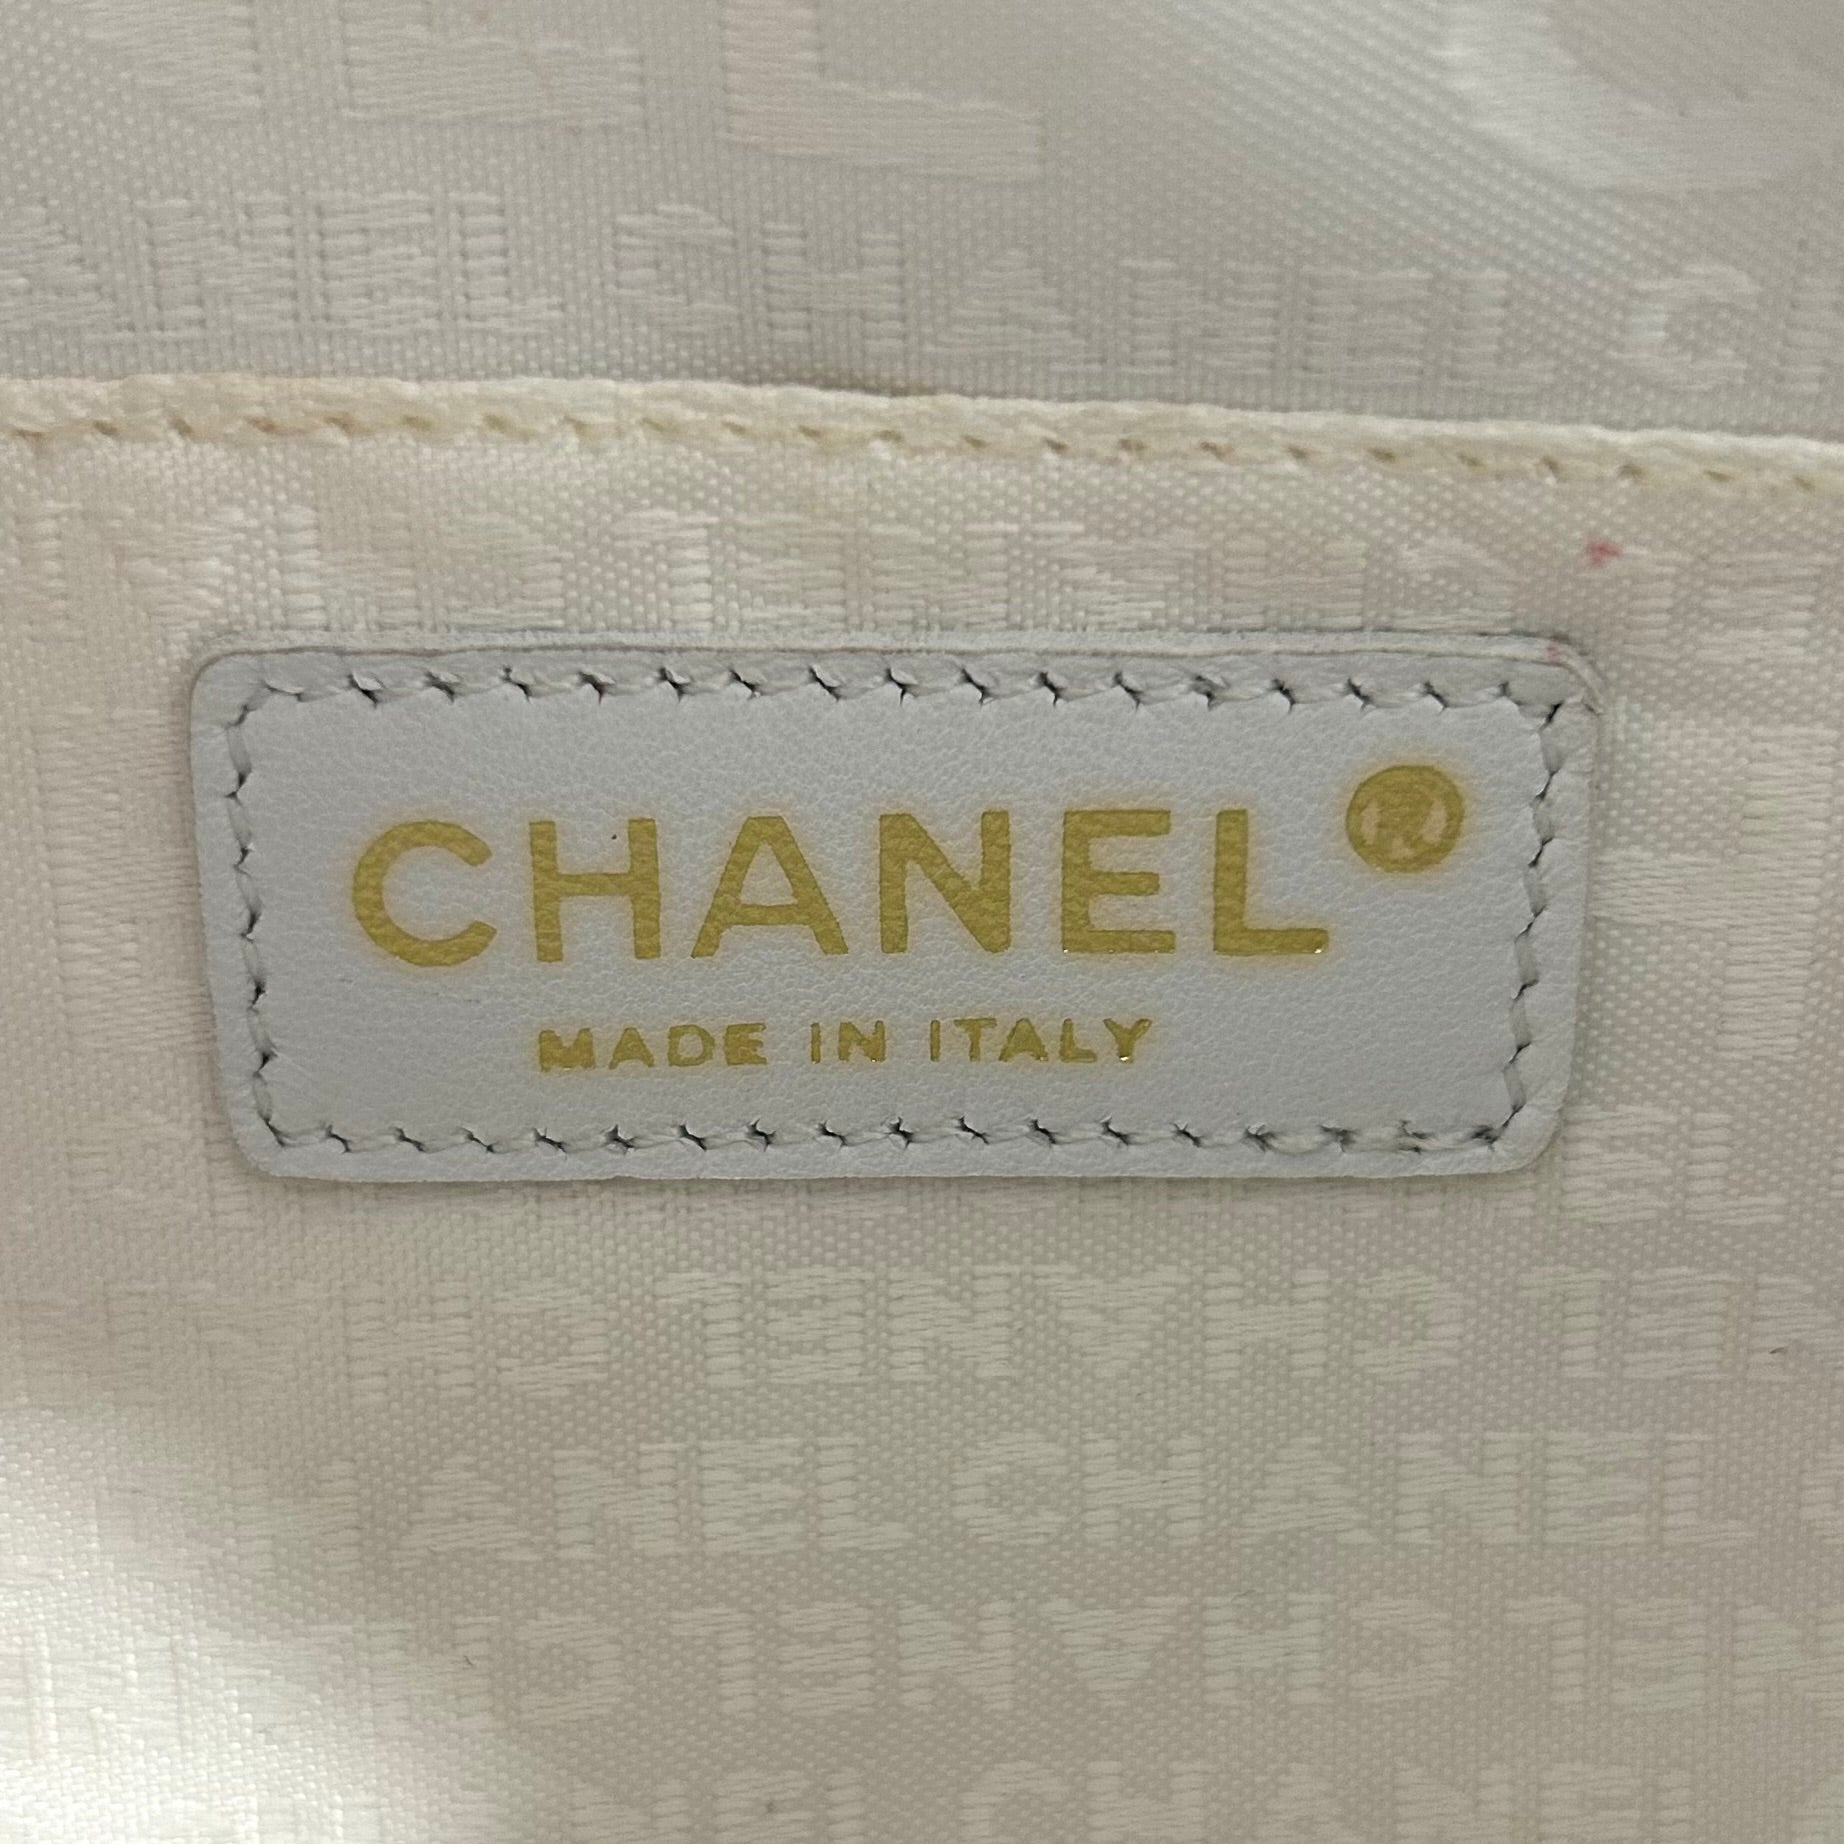 Chanel Vintage Black & White Chocolate Bar Bag